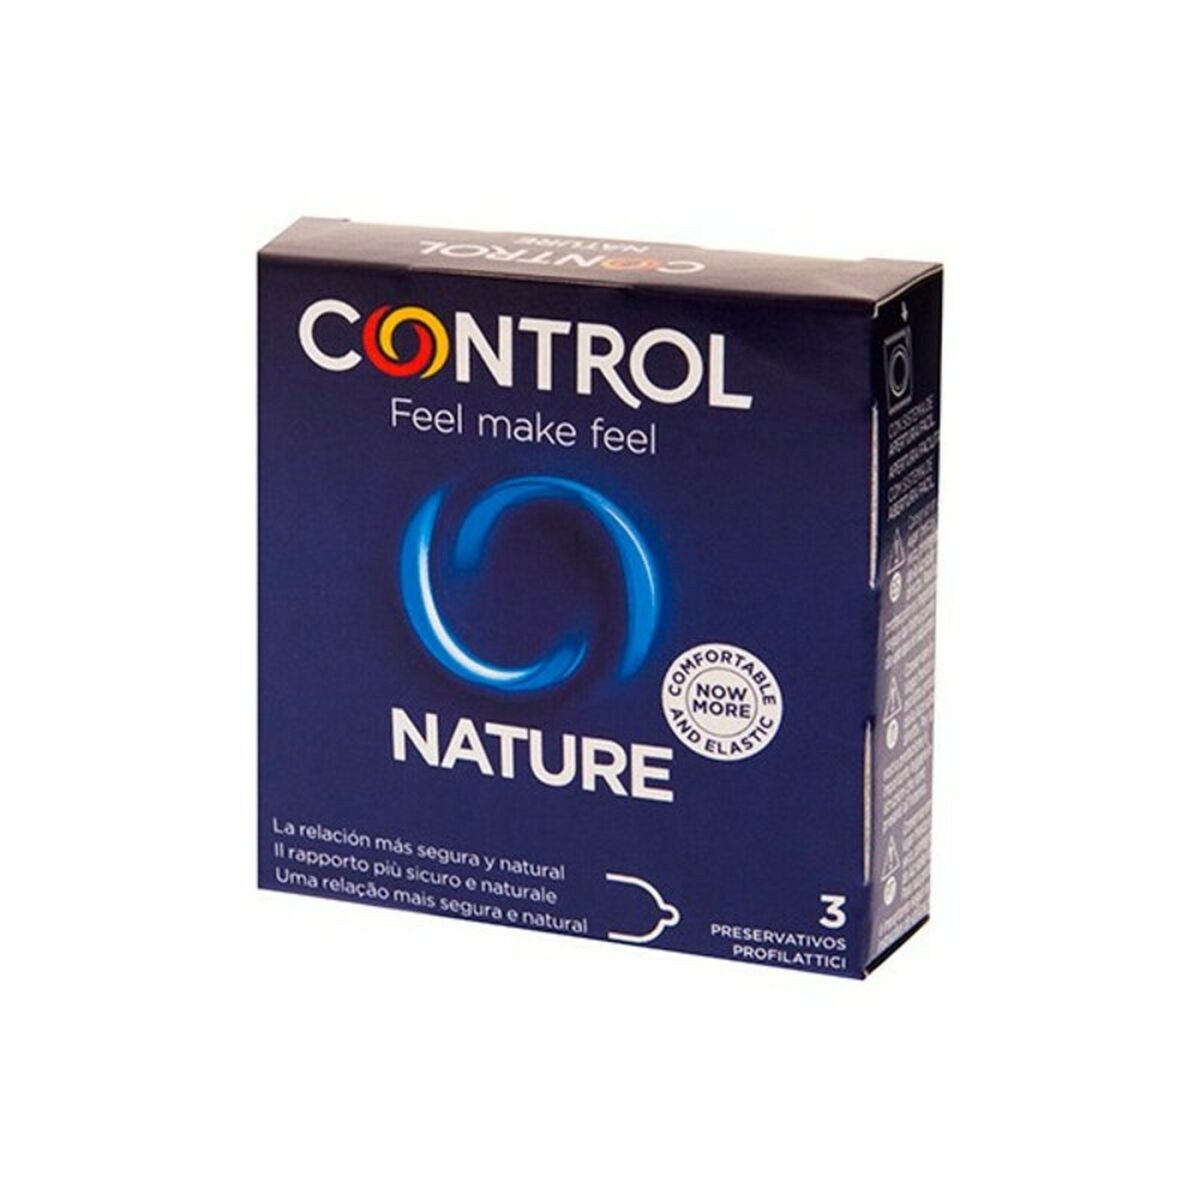 Osta tuote Kondomit Nature Control (3 uds) verkkokaupastamme Korhone: Seksikauppa & Erotiikka 10% alennuksella koodilla KORHONE